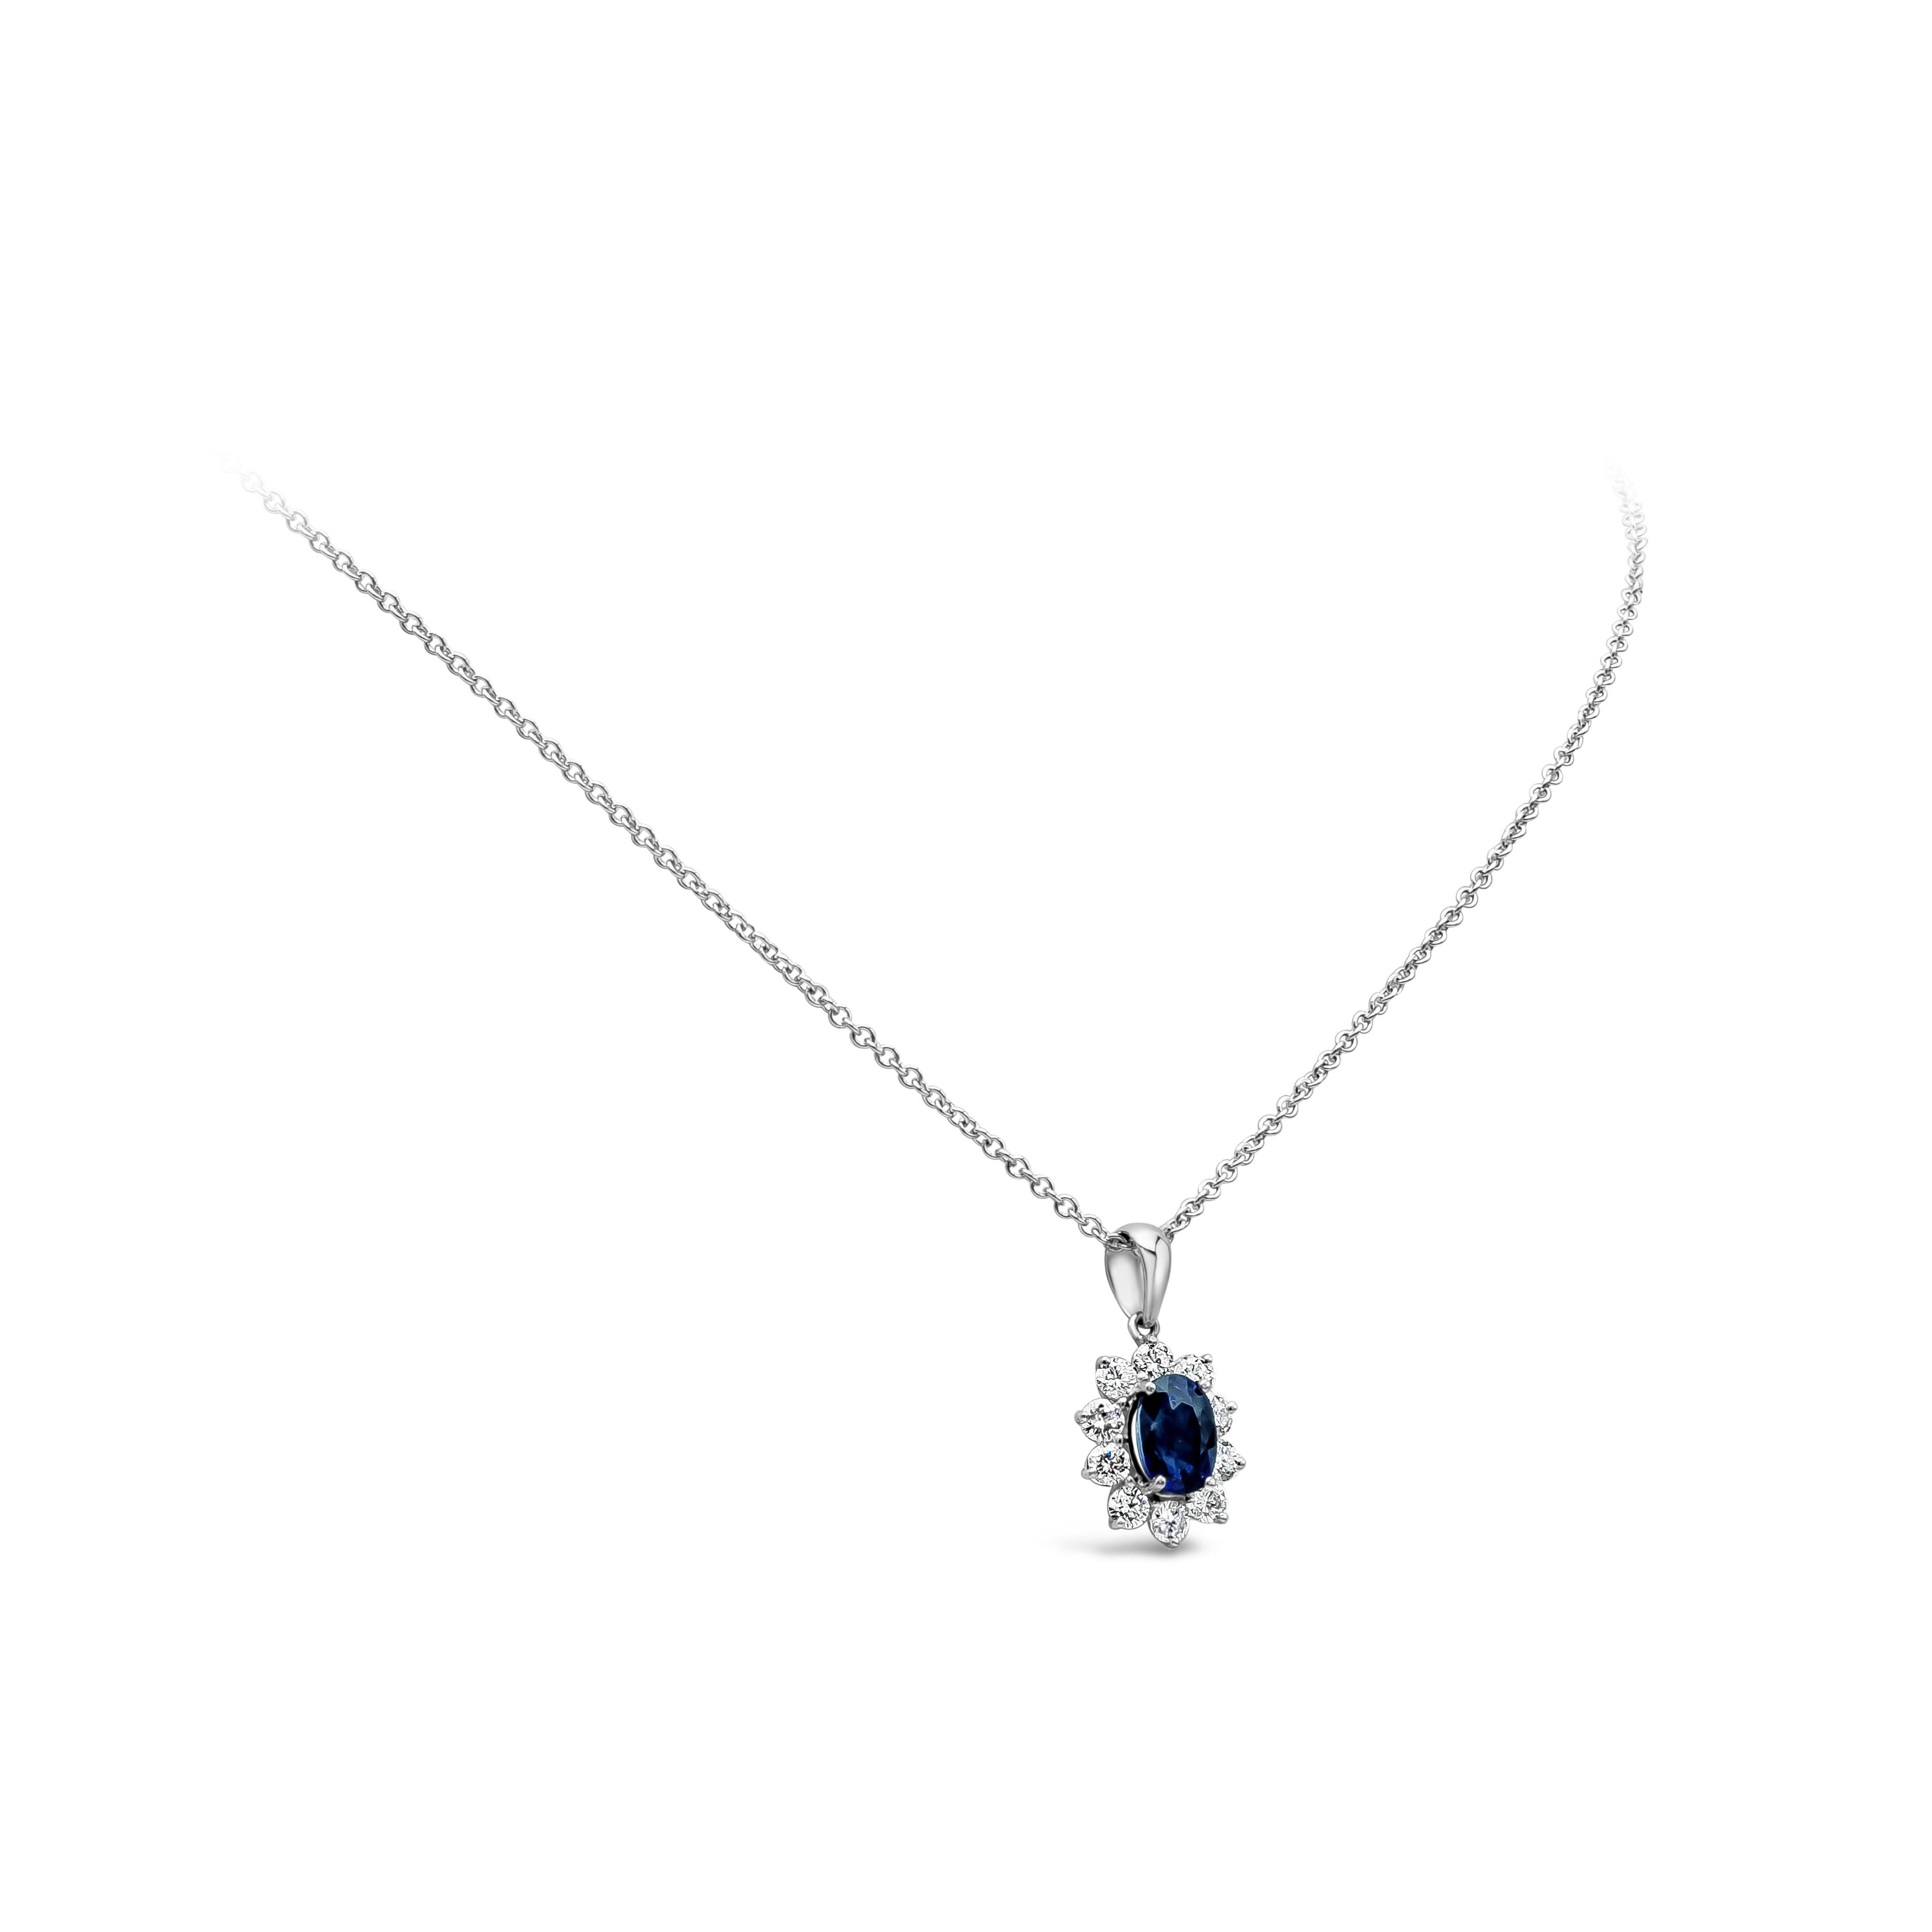 Contemporary Roman Malakov 1.90 Carat Blue Sapphire and Diamond Pendant Necklace